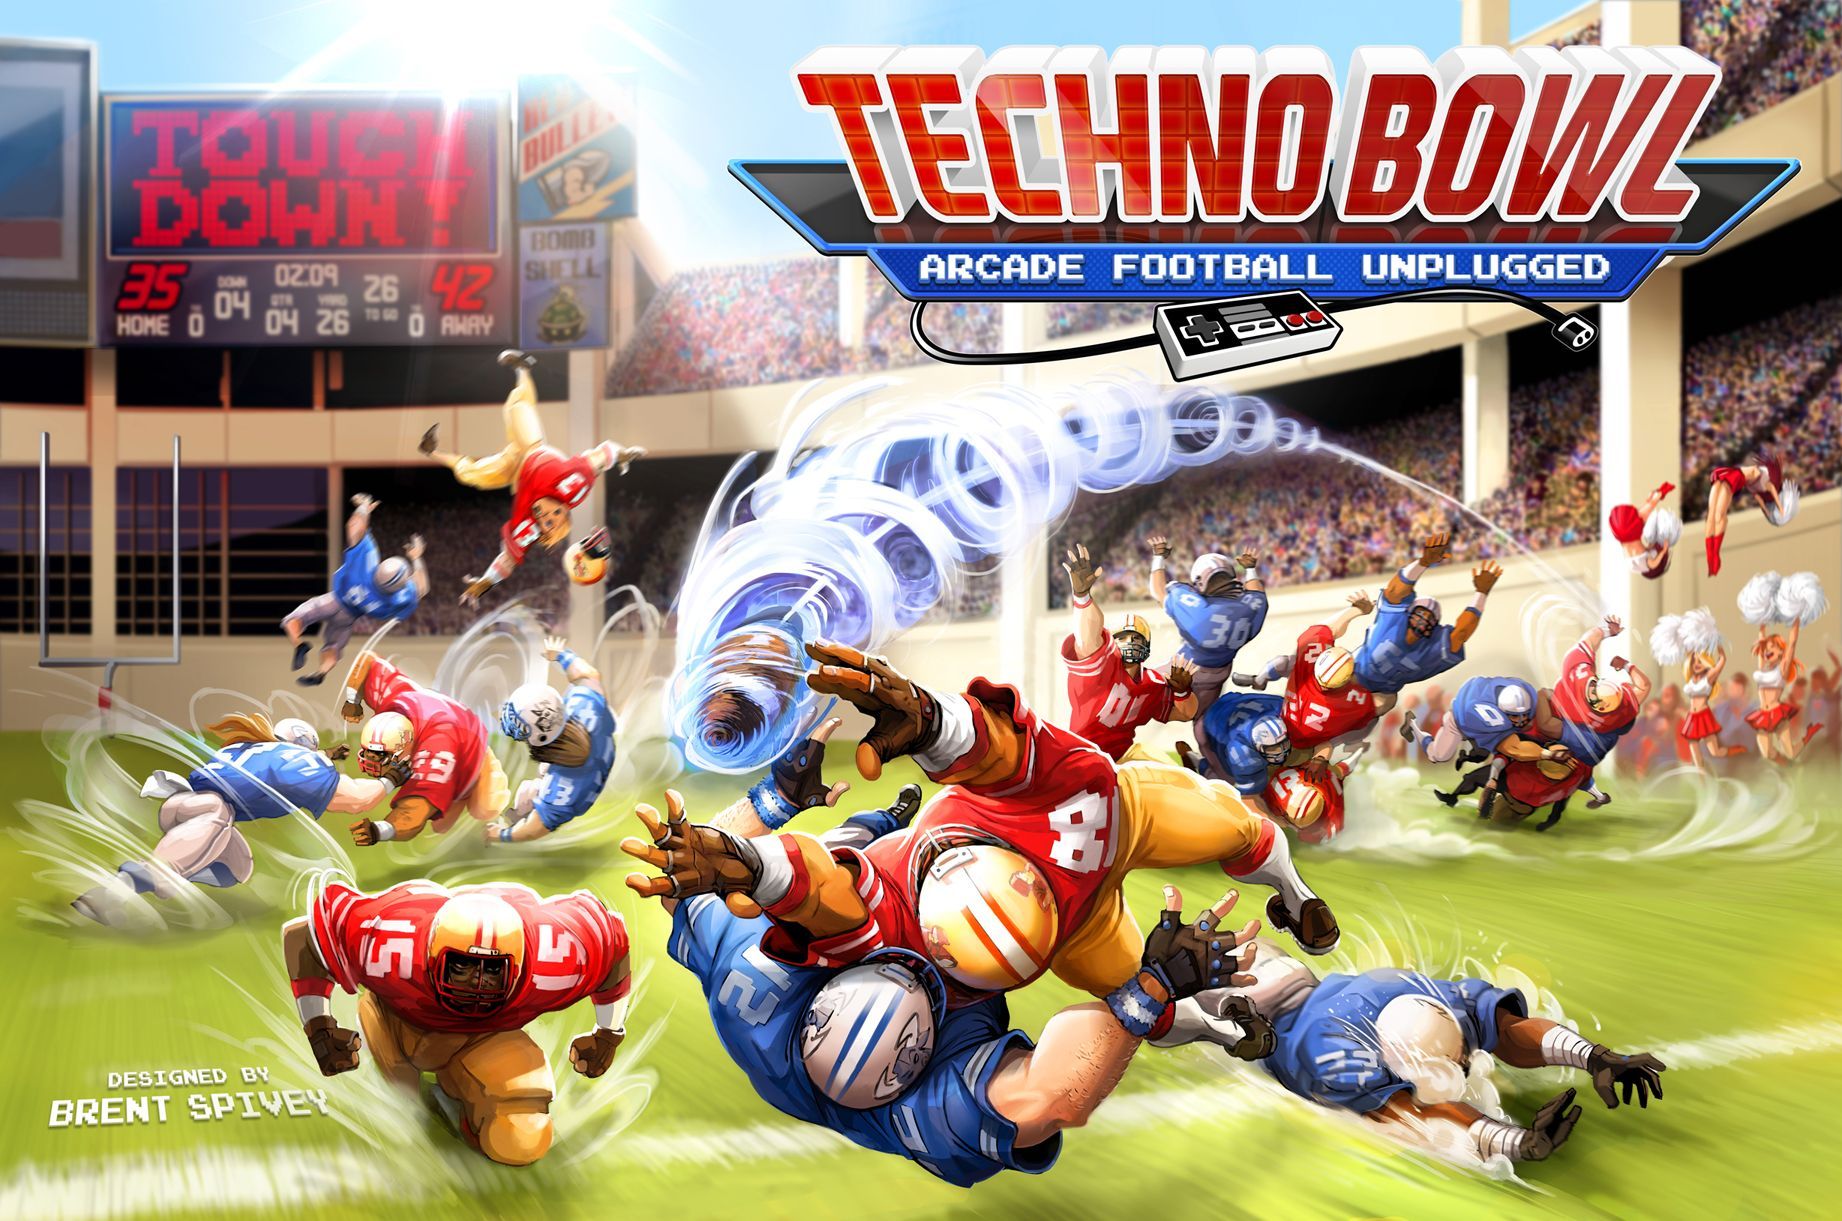 Techno Bowl: Arcade Football Unplugged